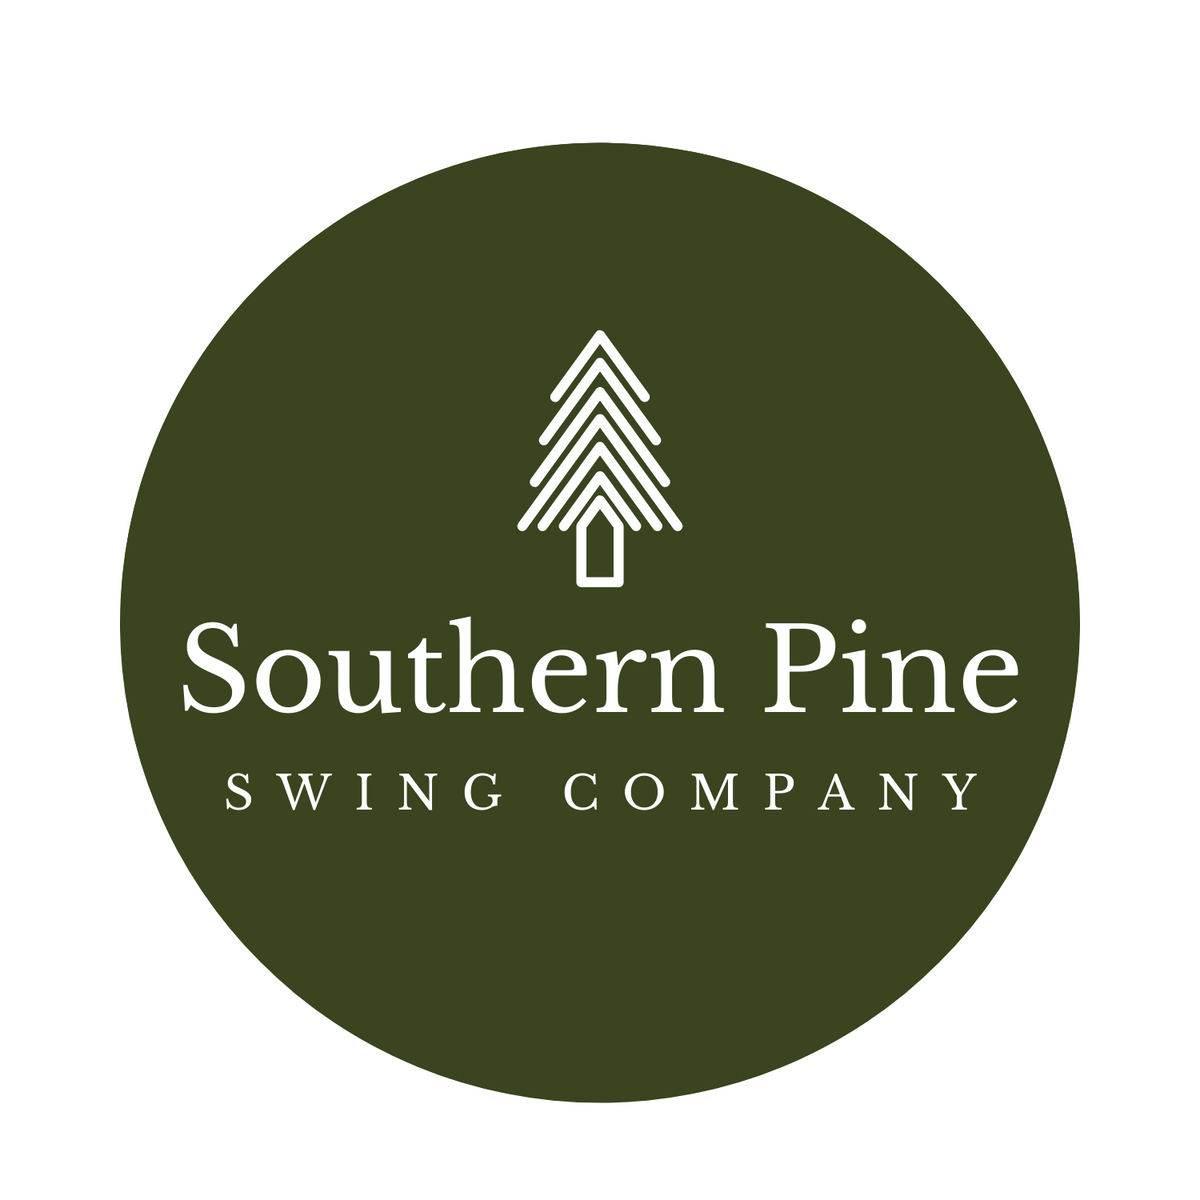 Southern Pine Swing Company